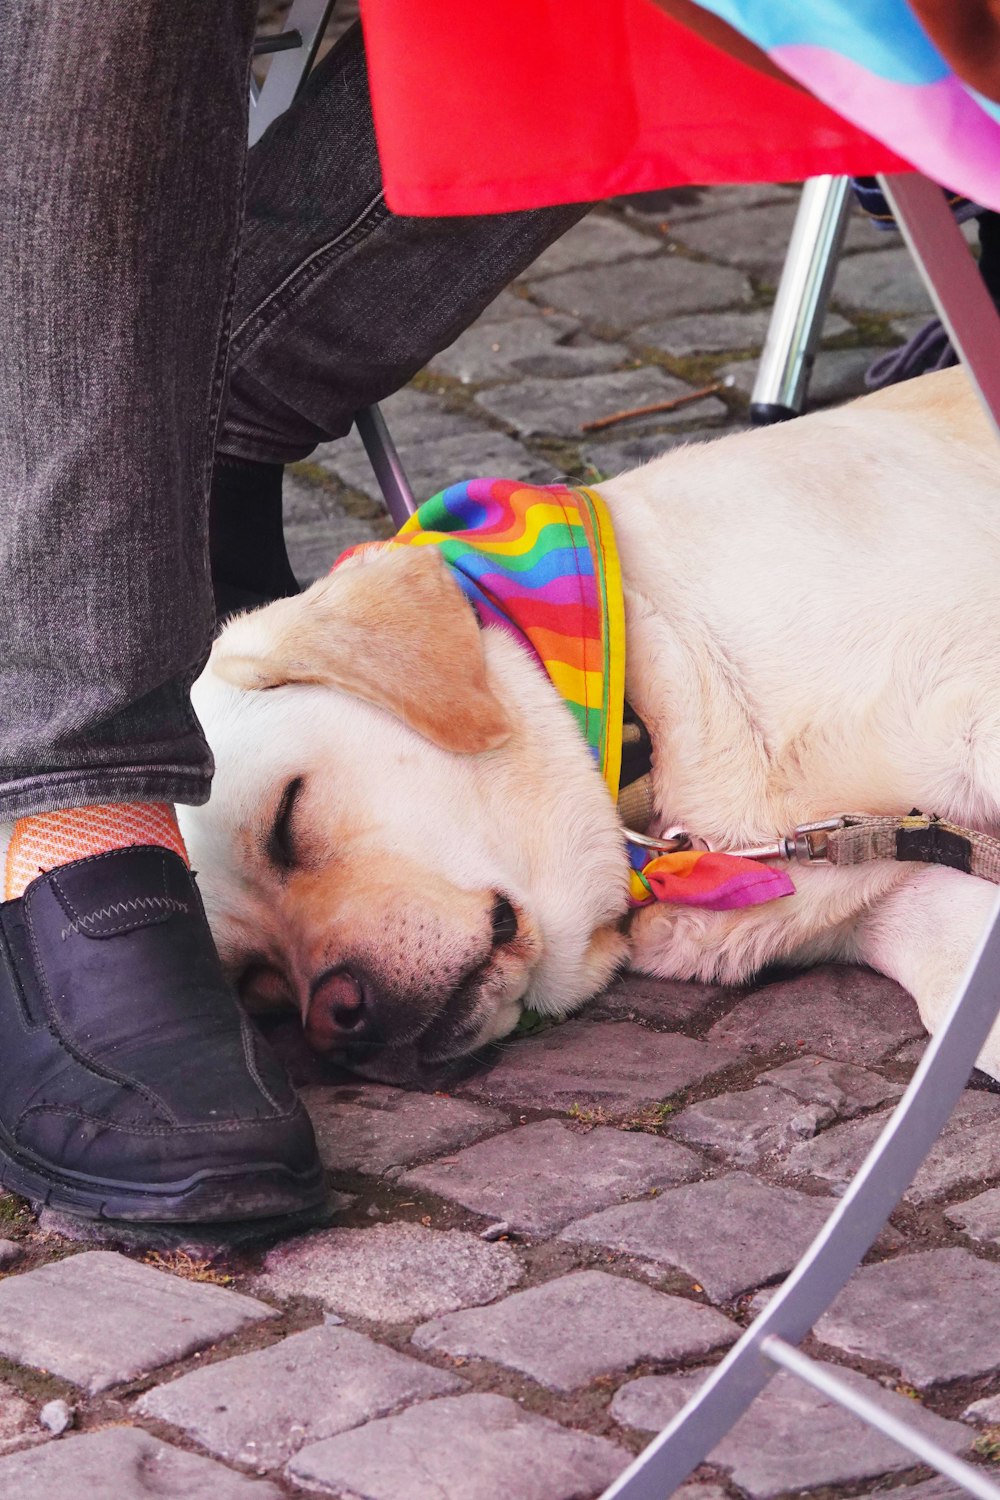 a dog wearing a rainbow hat